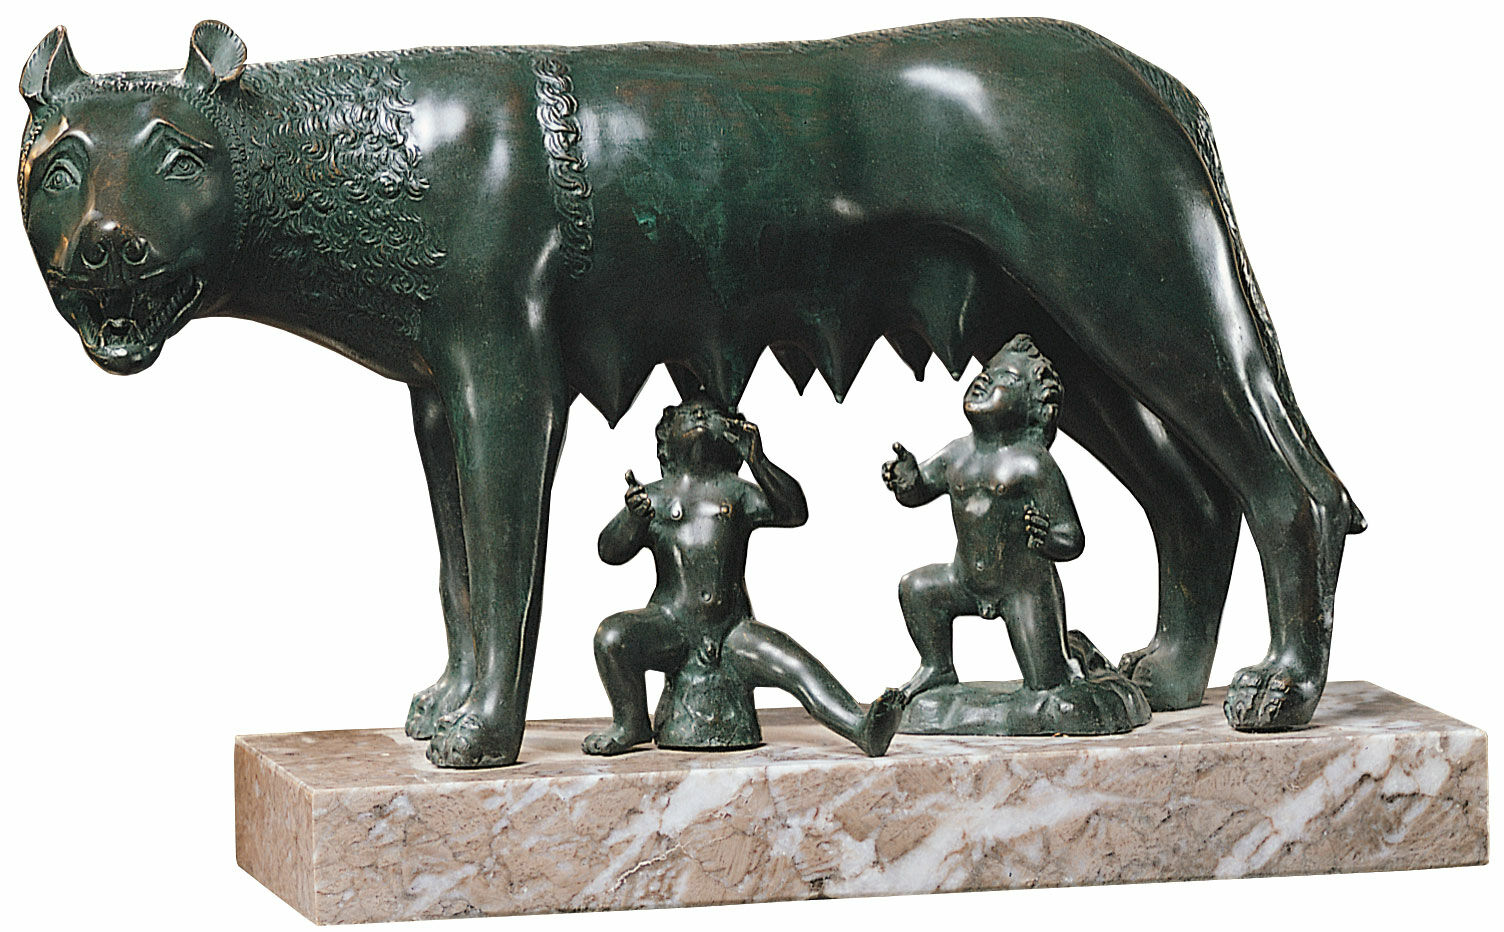 Skulptur "Den kapitolinske ulv med Romulus og Remus", version i limet bronze